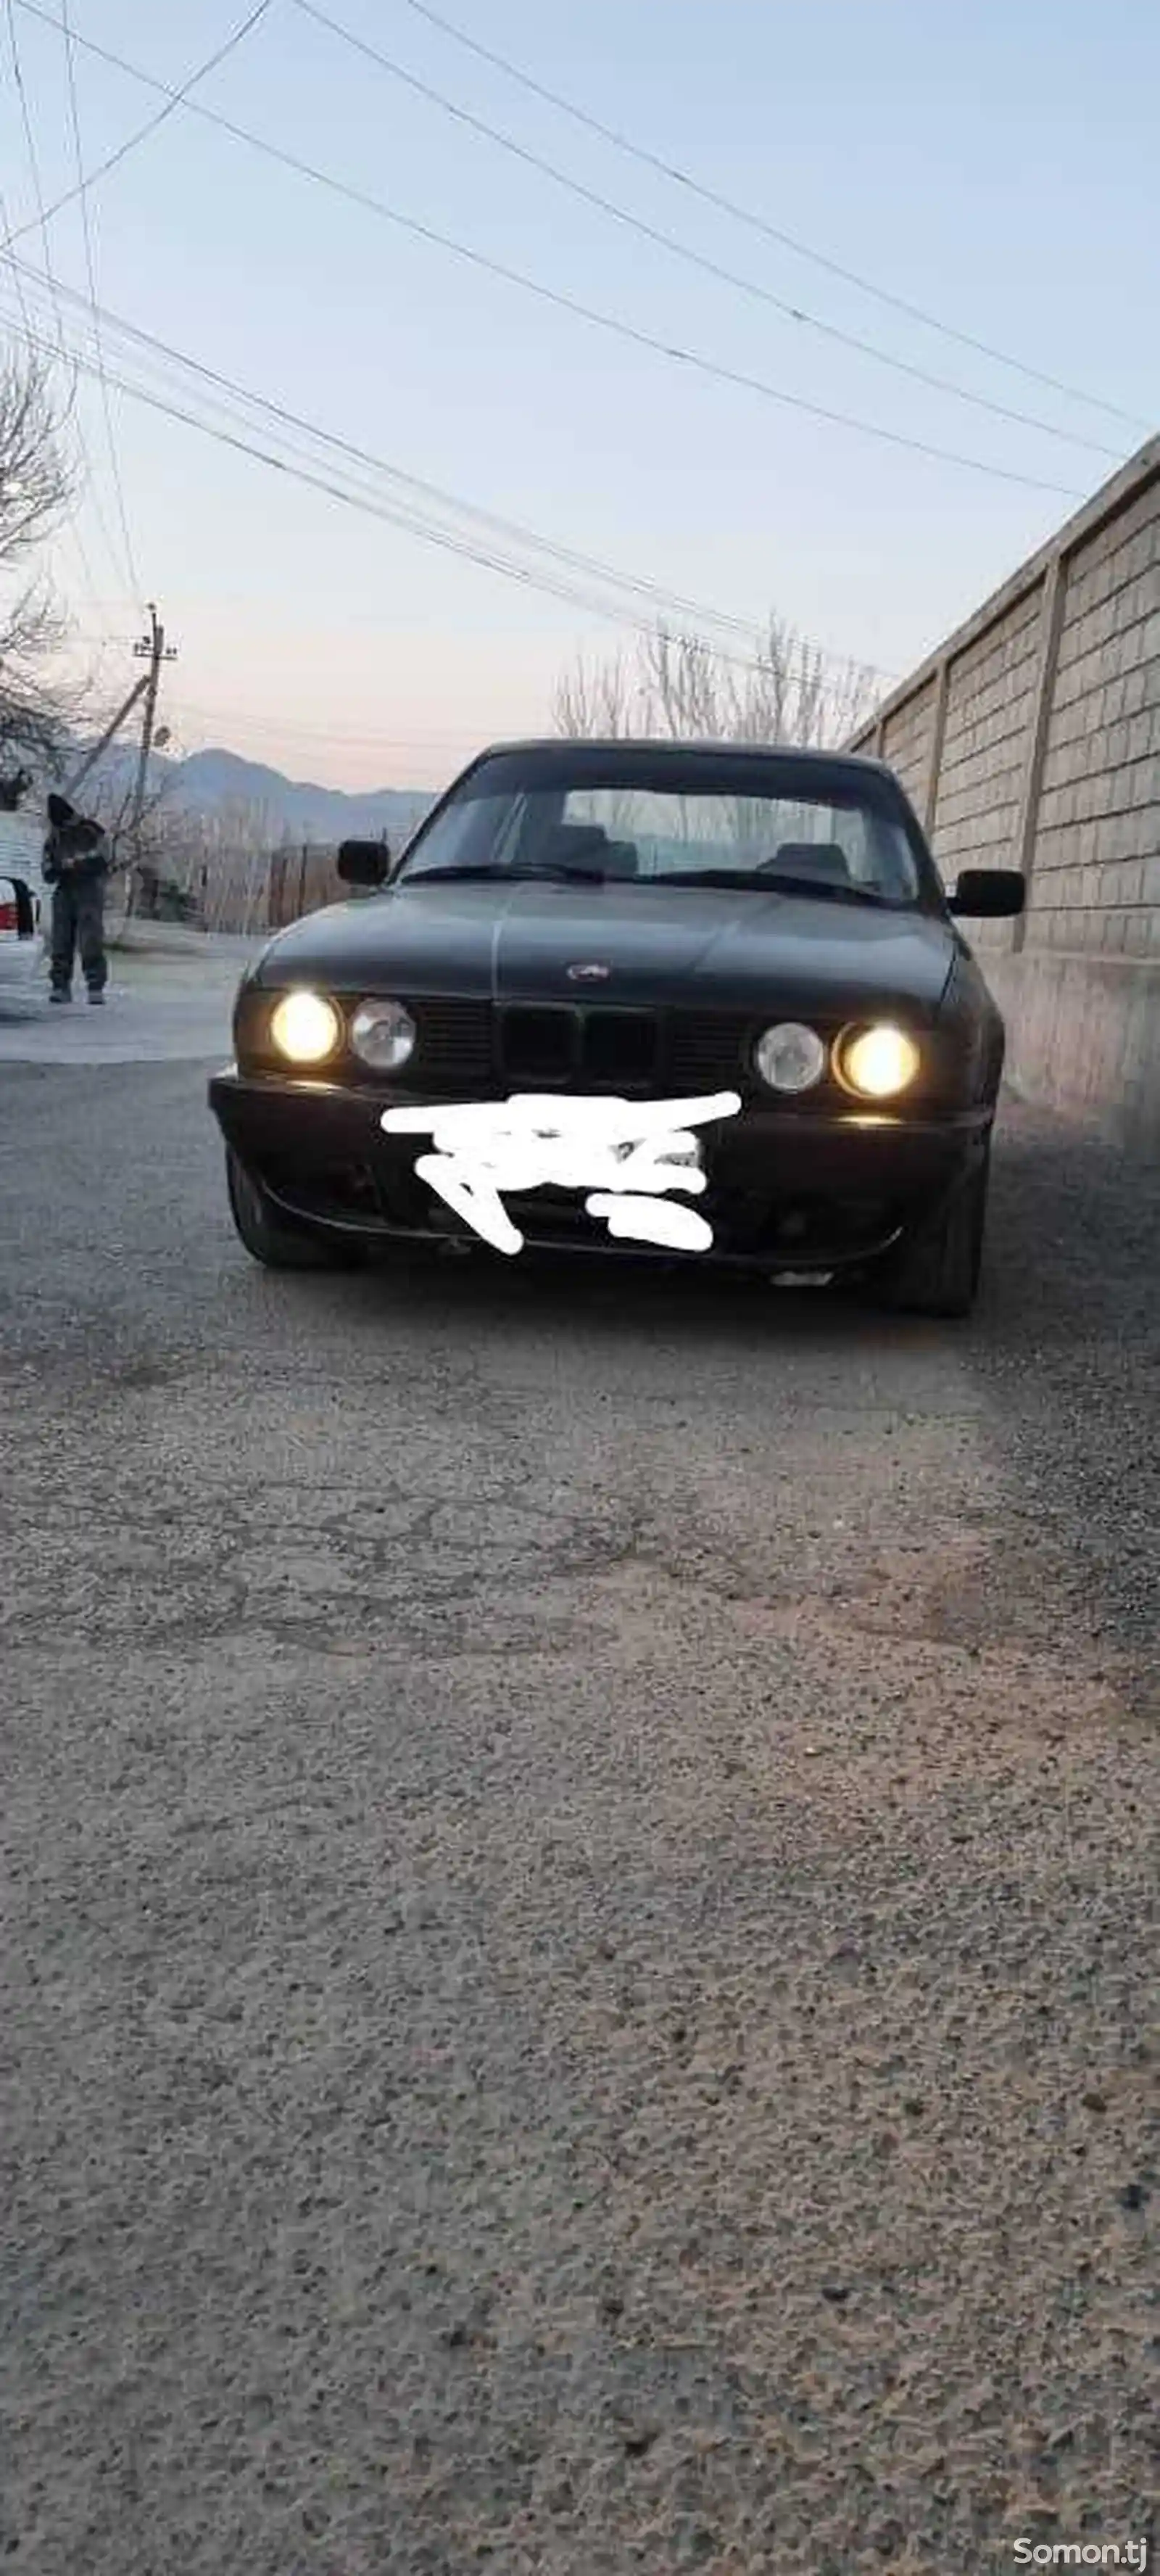 BMW 5 series, 1990-1